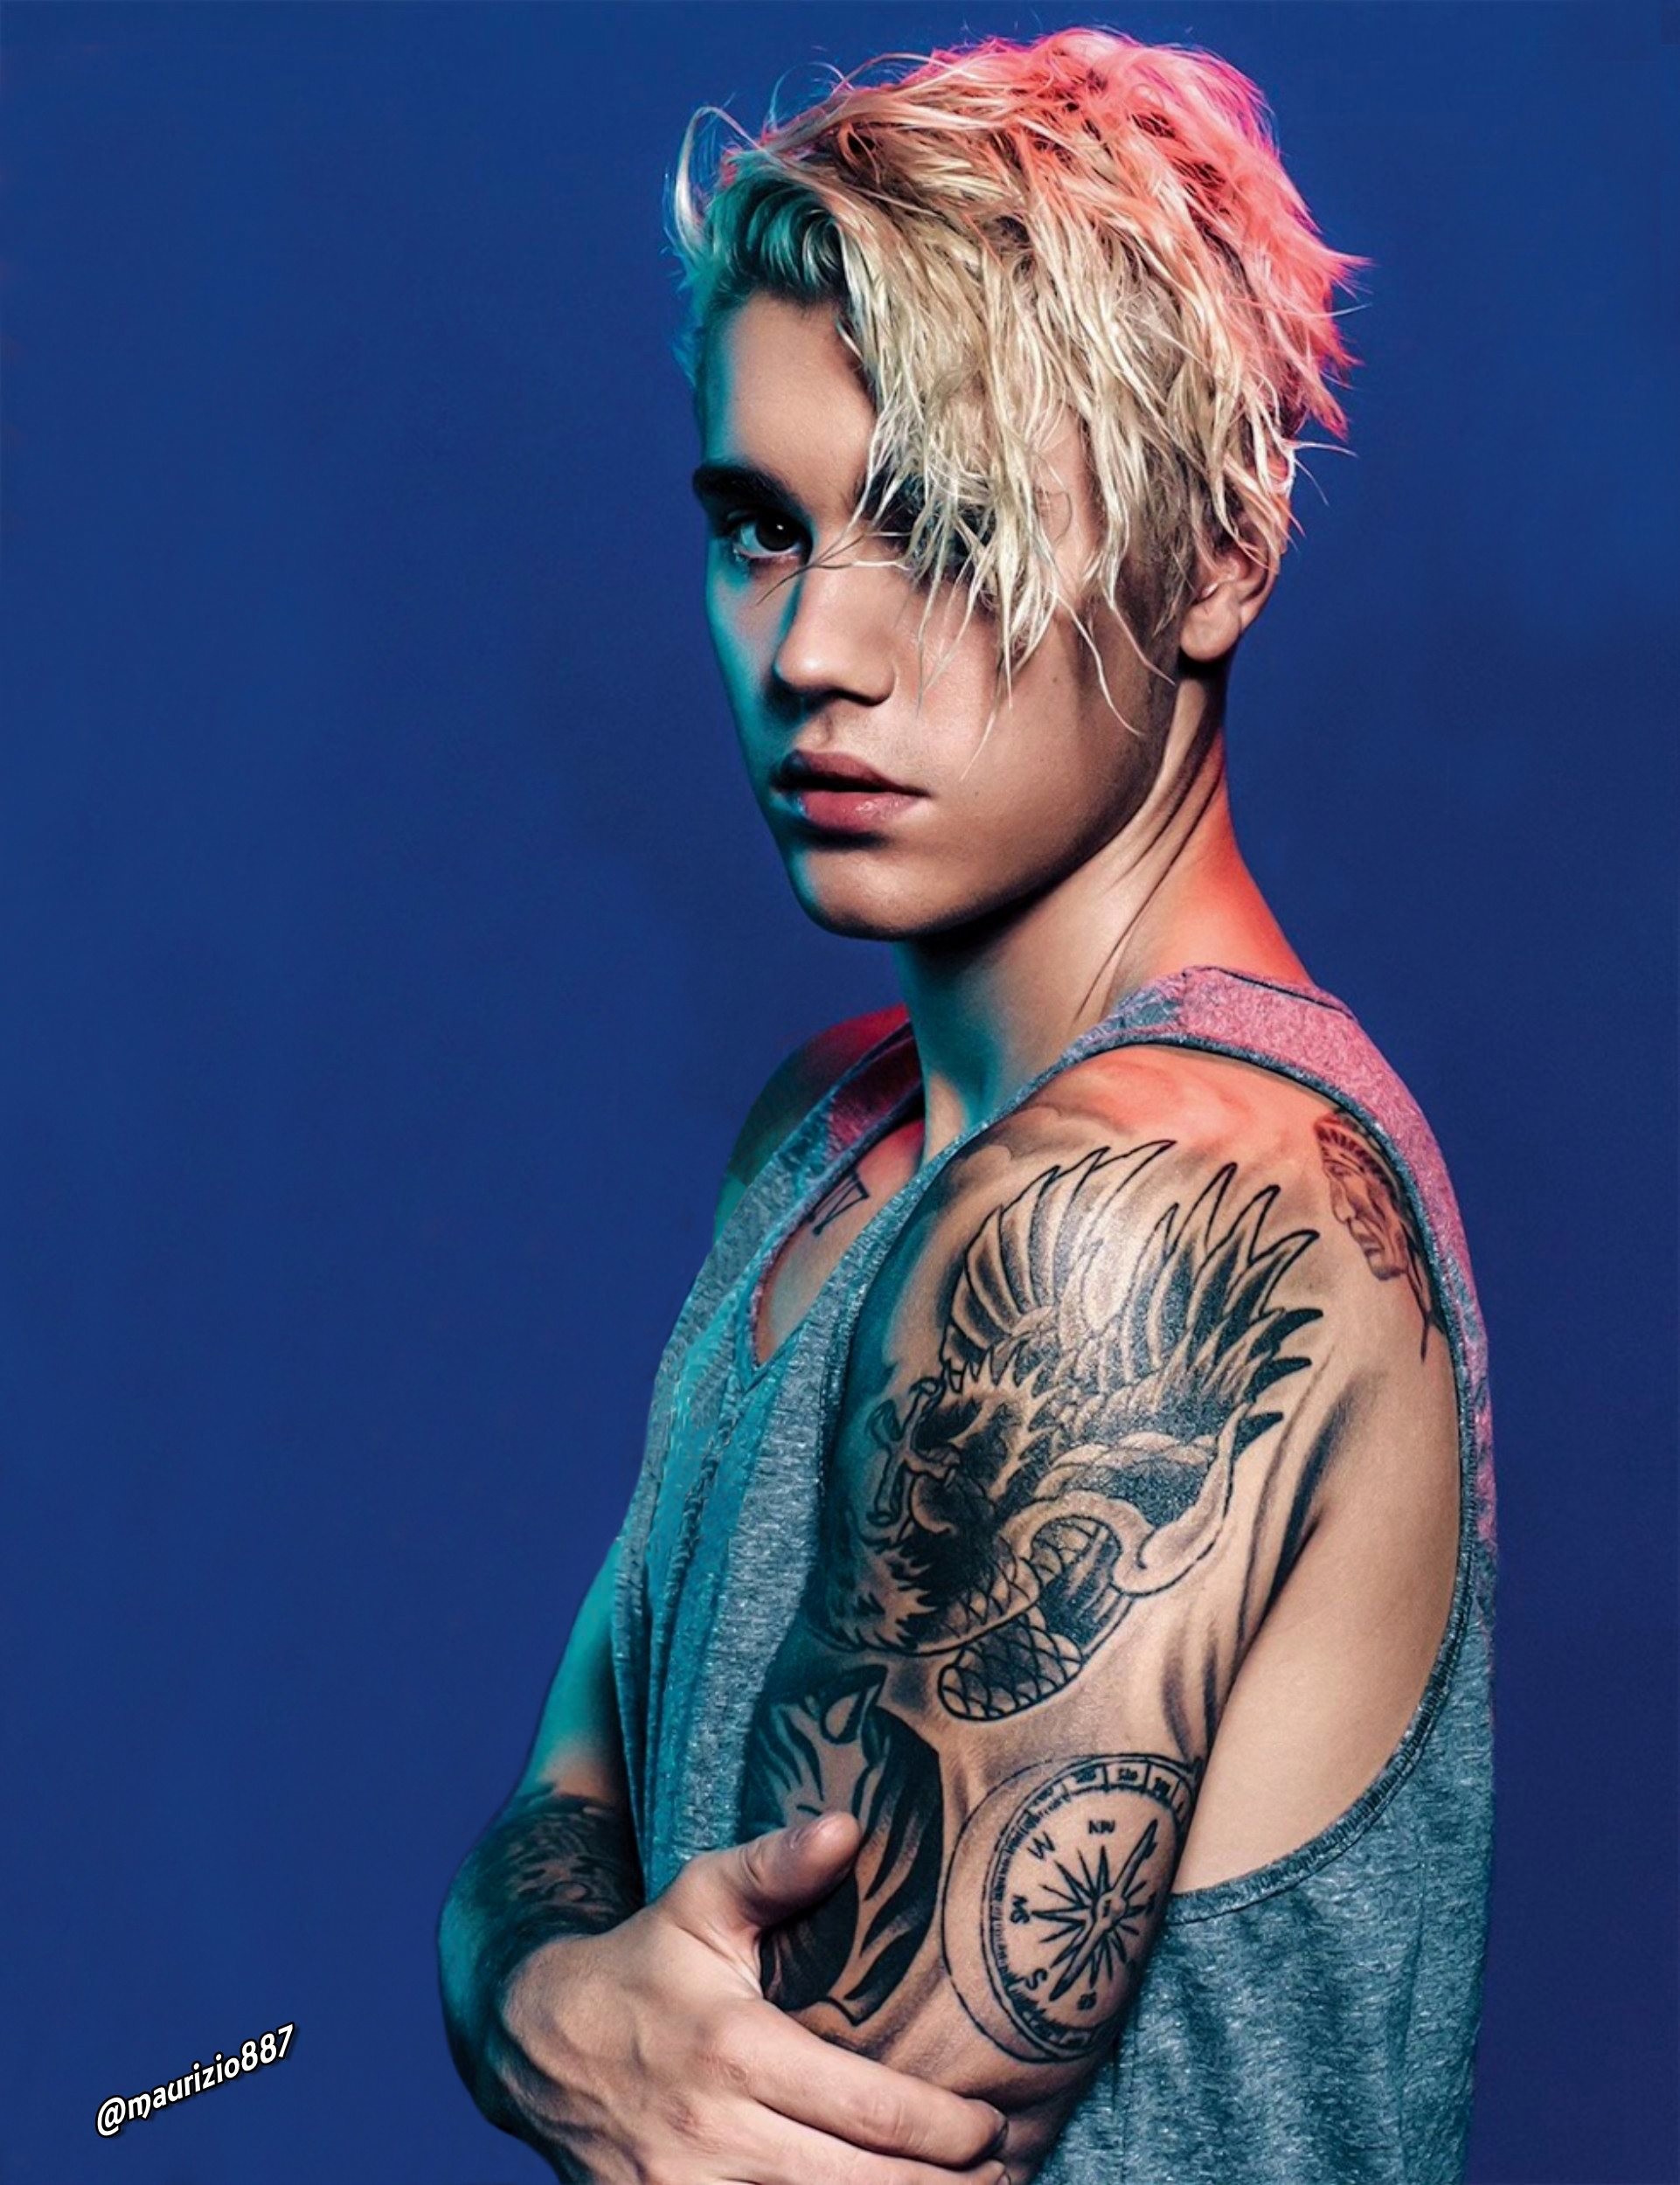 Justin Bieber Wallpaper HD Image